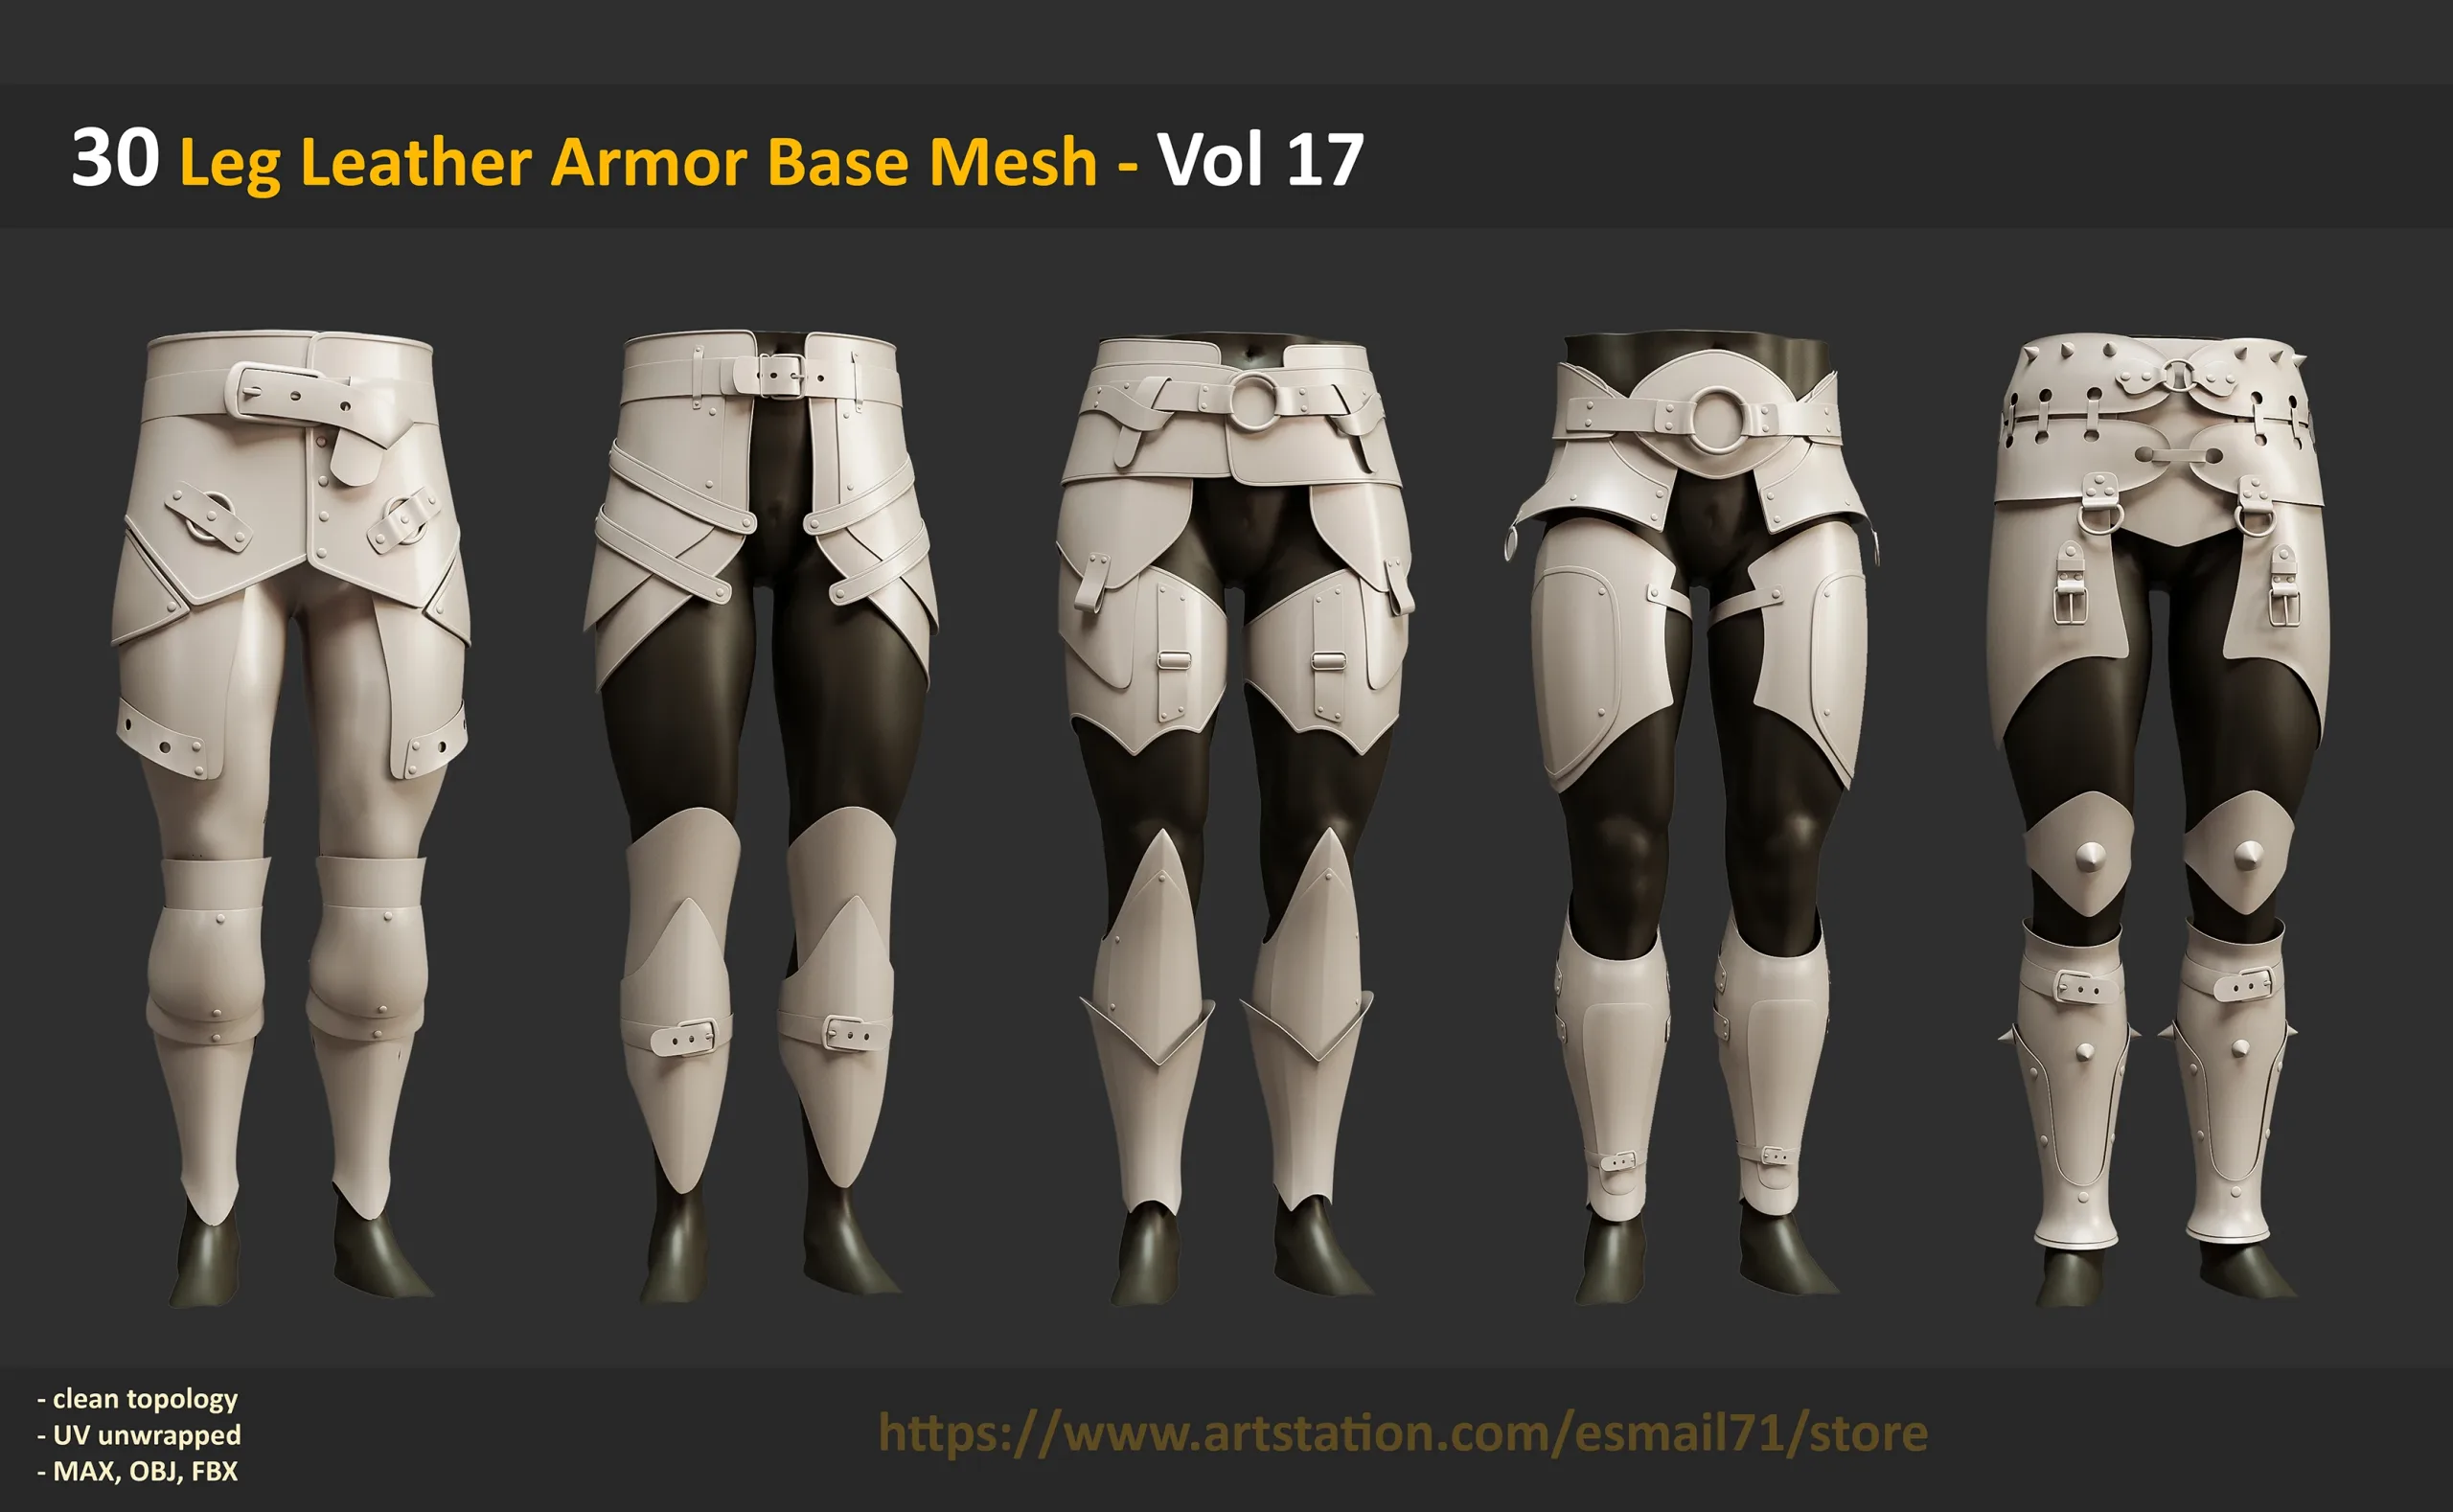 30 Leg Leather Armor Base Mesh - Vol 17